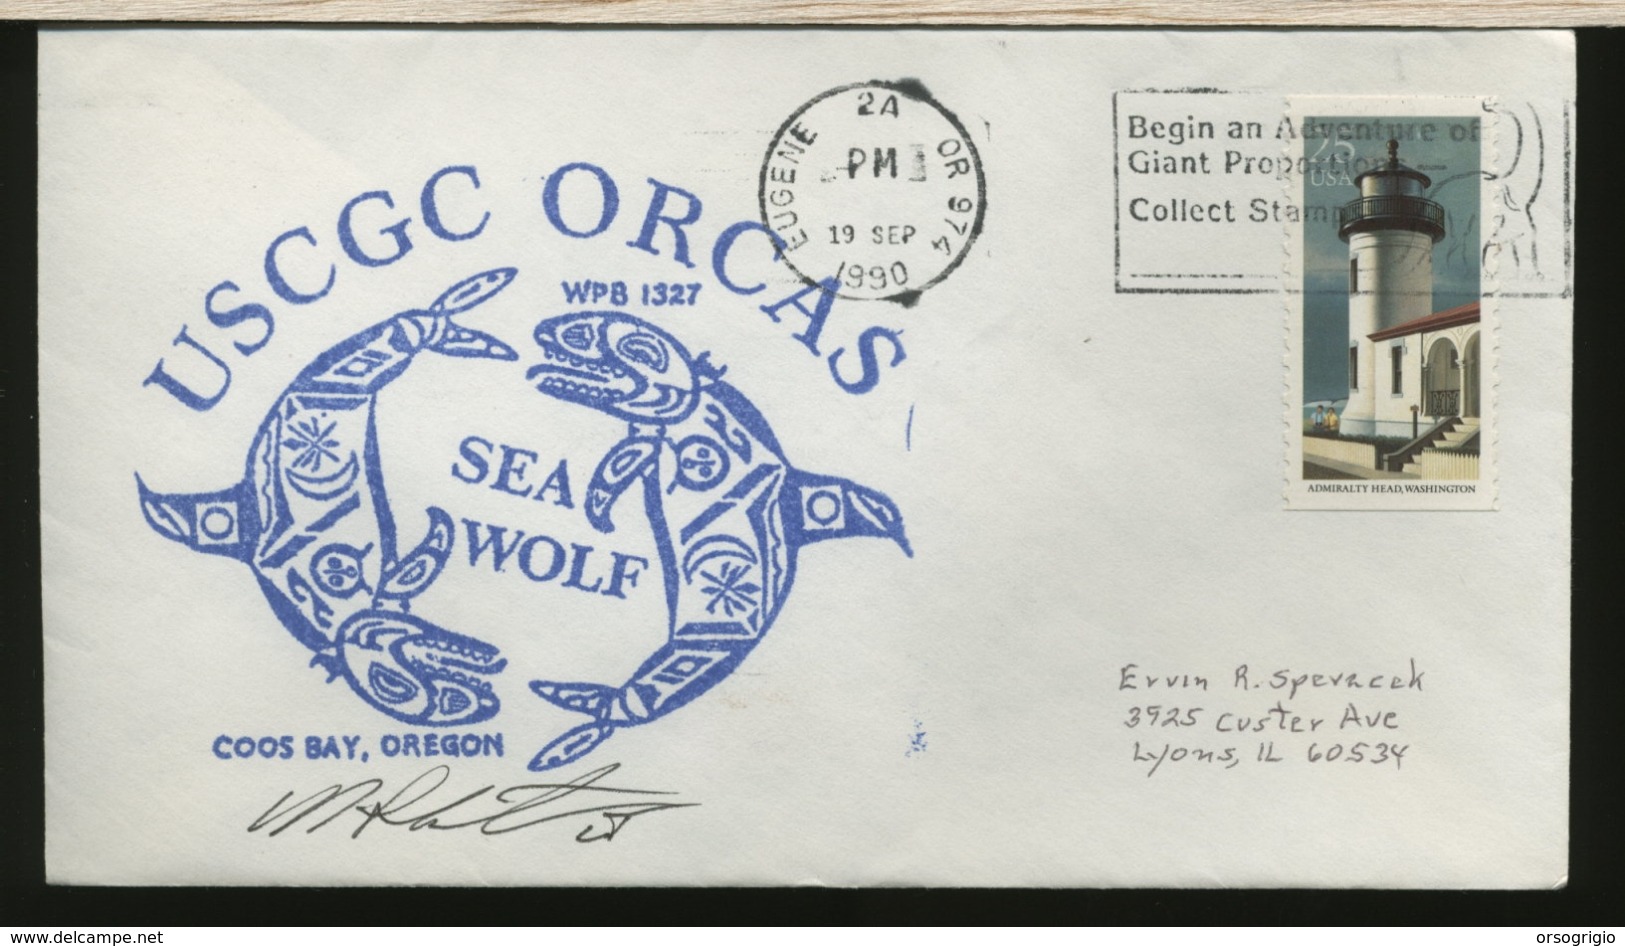 USA -  USCGC ORCAS  WPB-1327  SEA WOLF - Navi Polari E Rompighiaccio